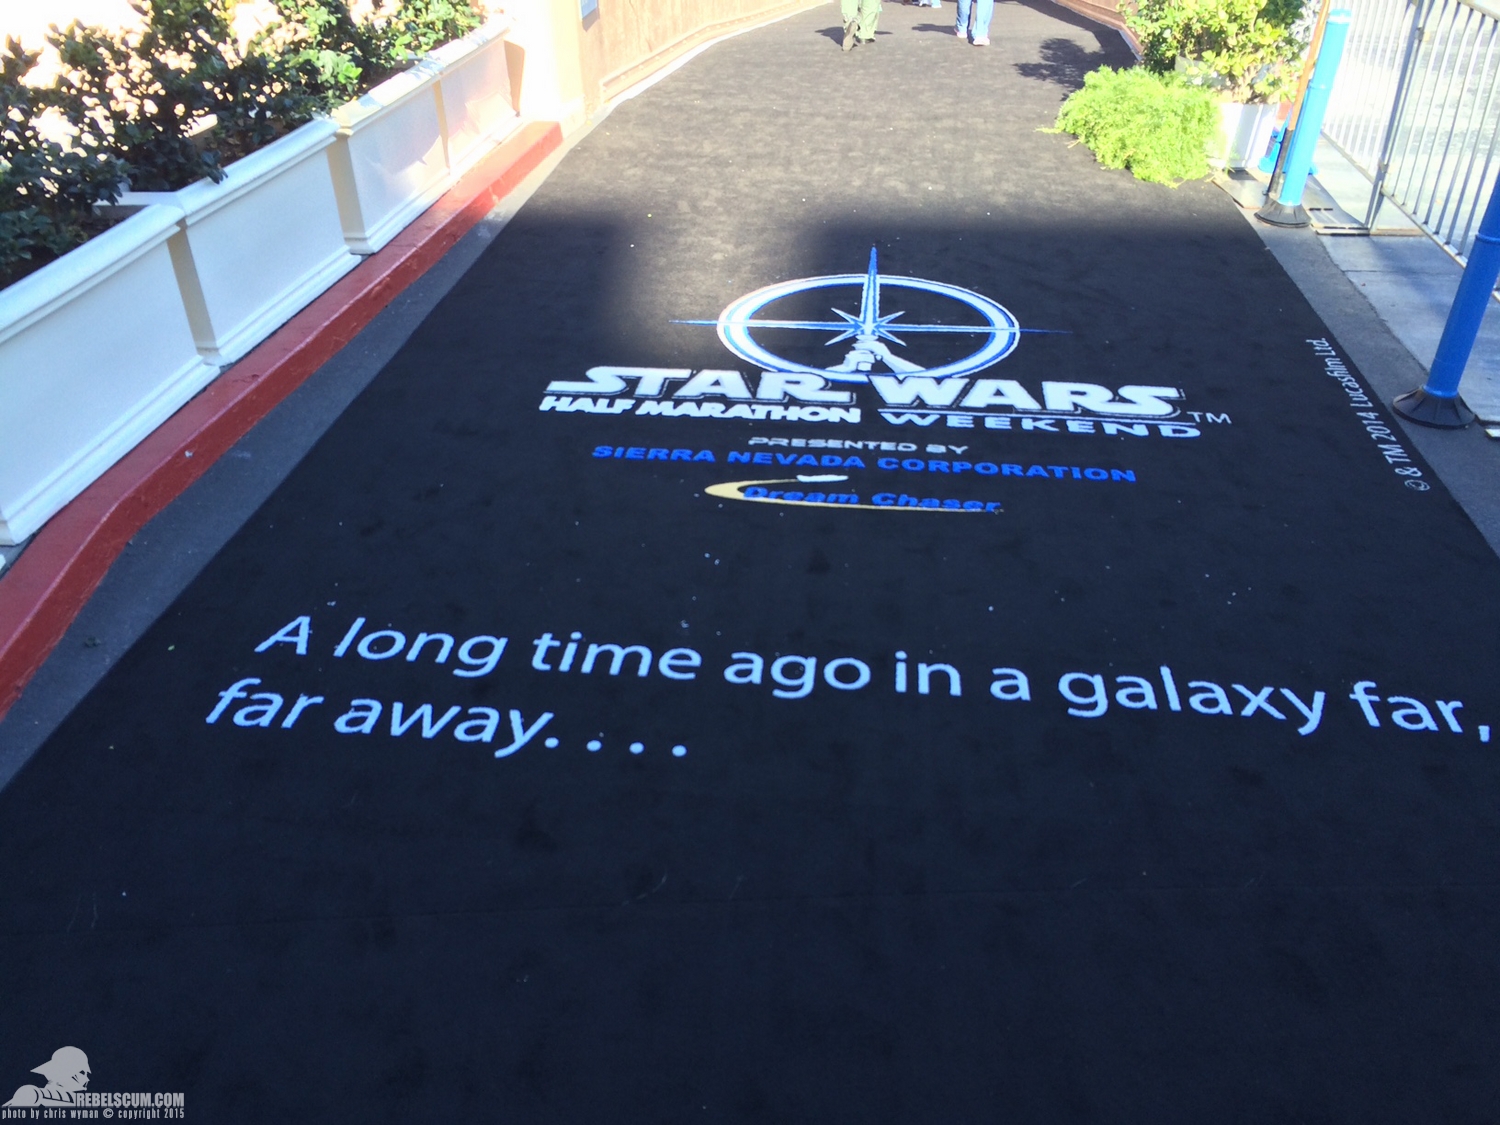 Inaugural-Star-Wars-Half-Marathon-Weekend-January-15-2015-006.jpg